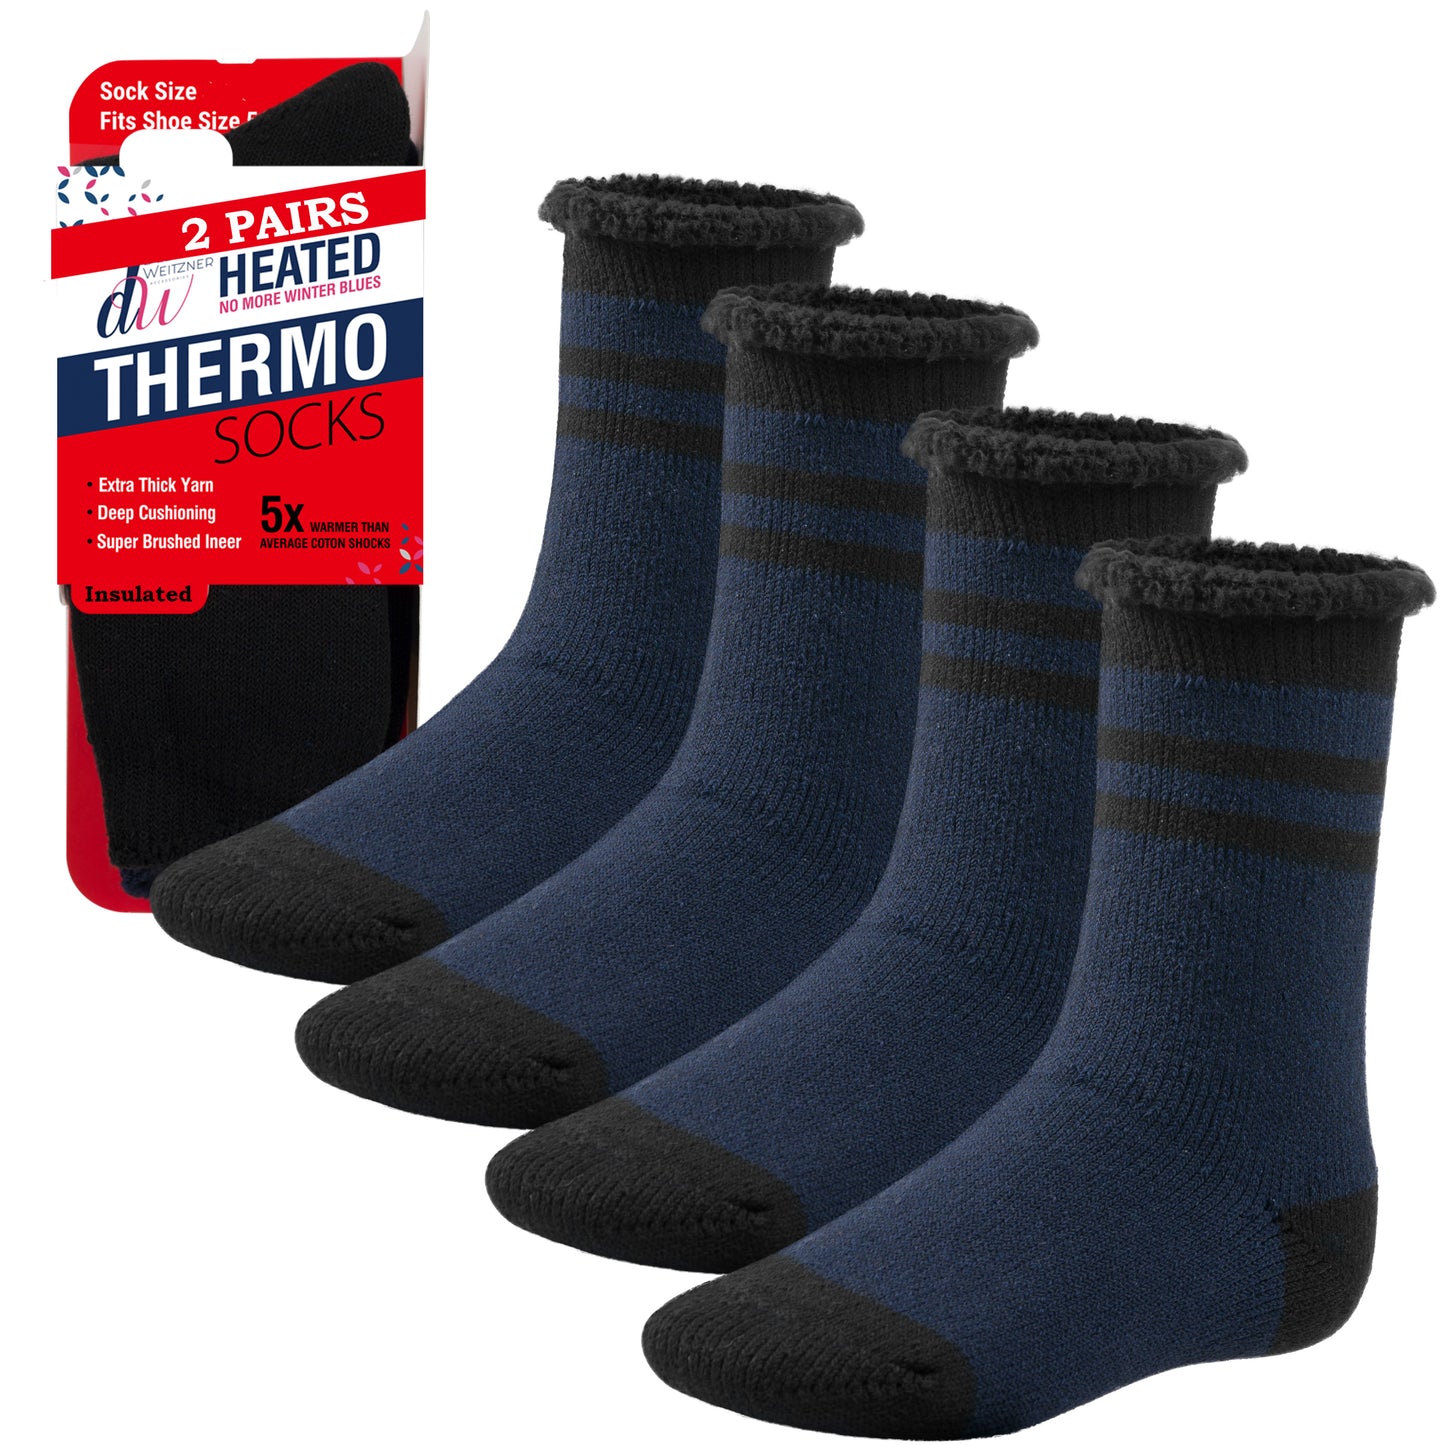 Thermal Winter Socks for Men and Women - 2 Pairs